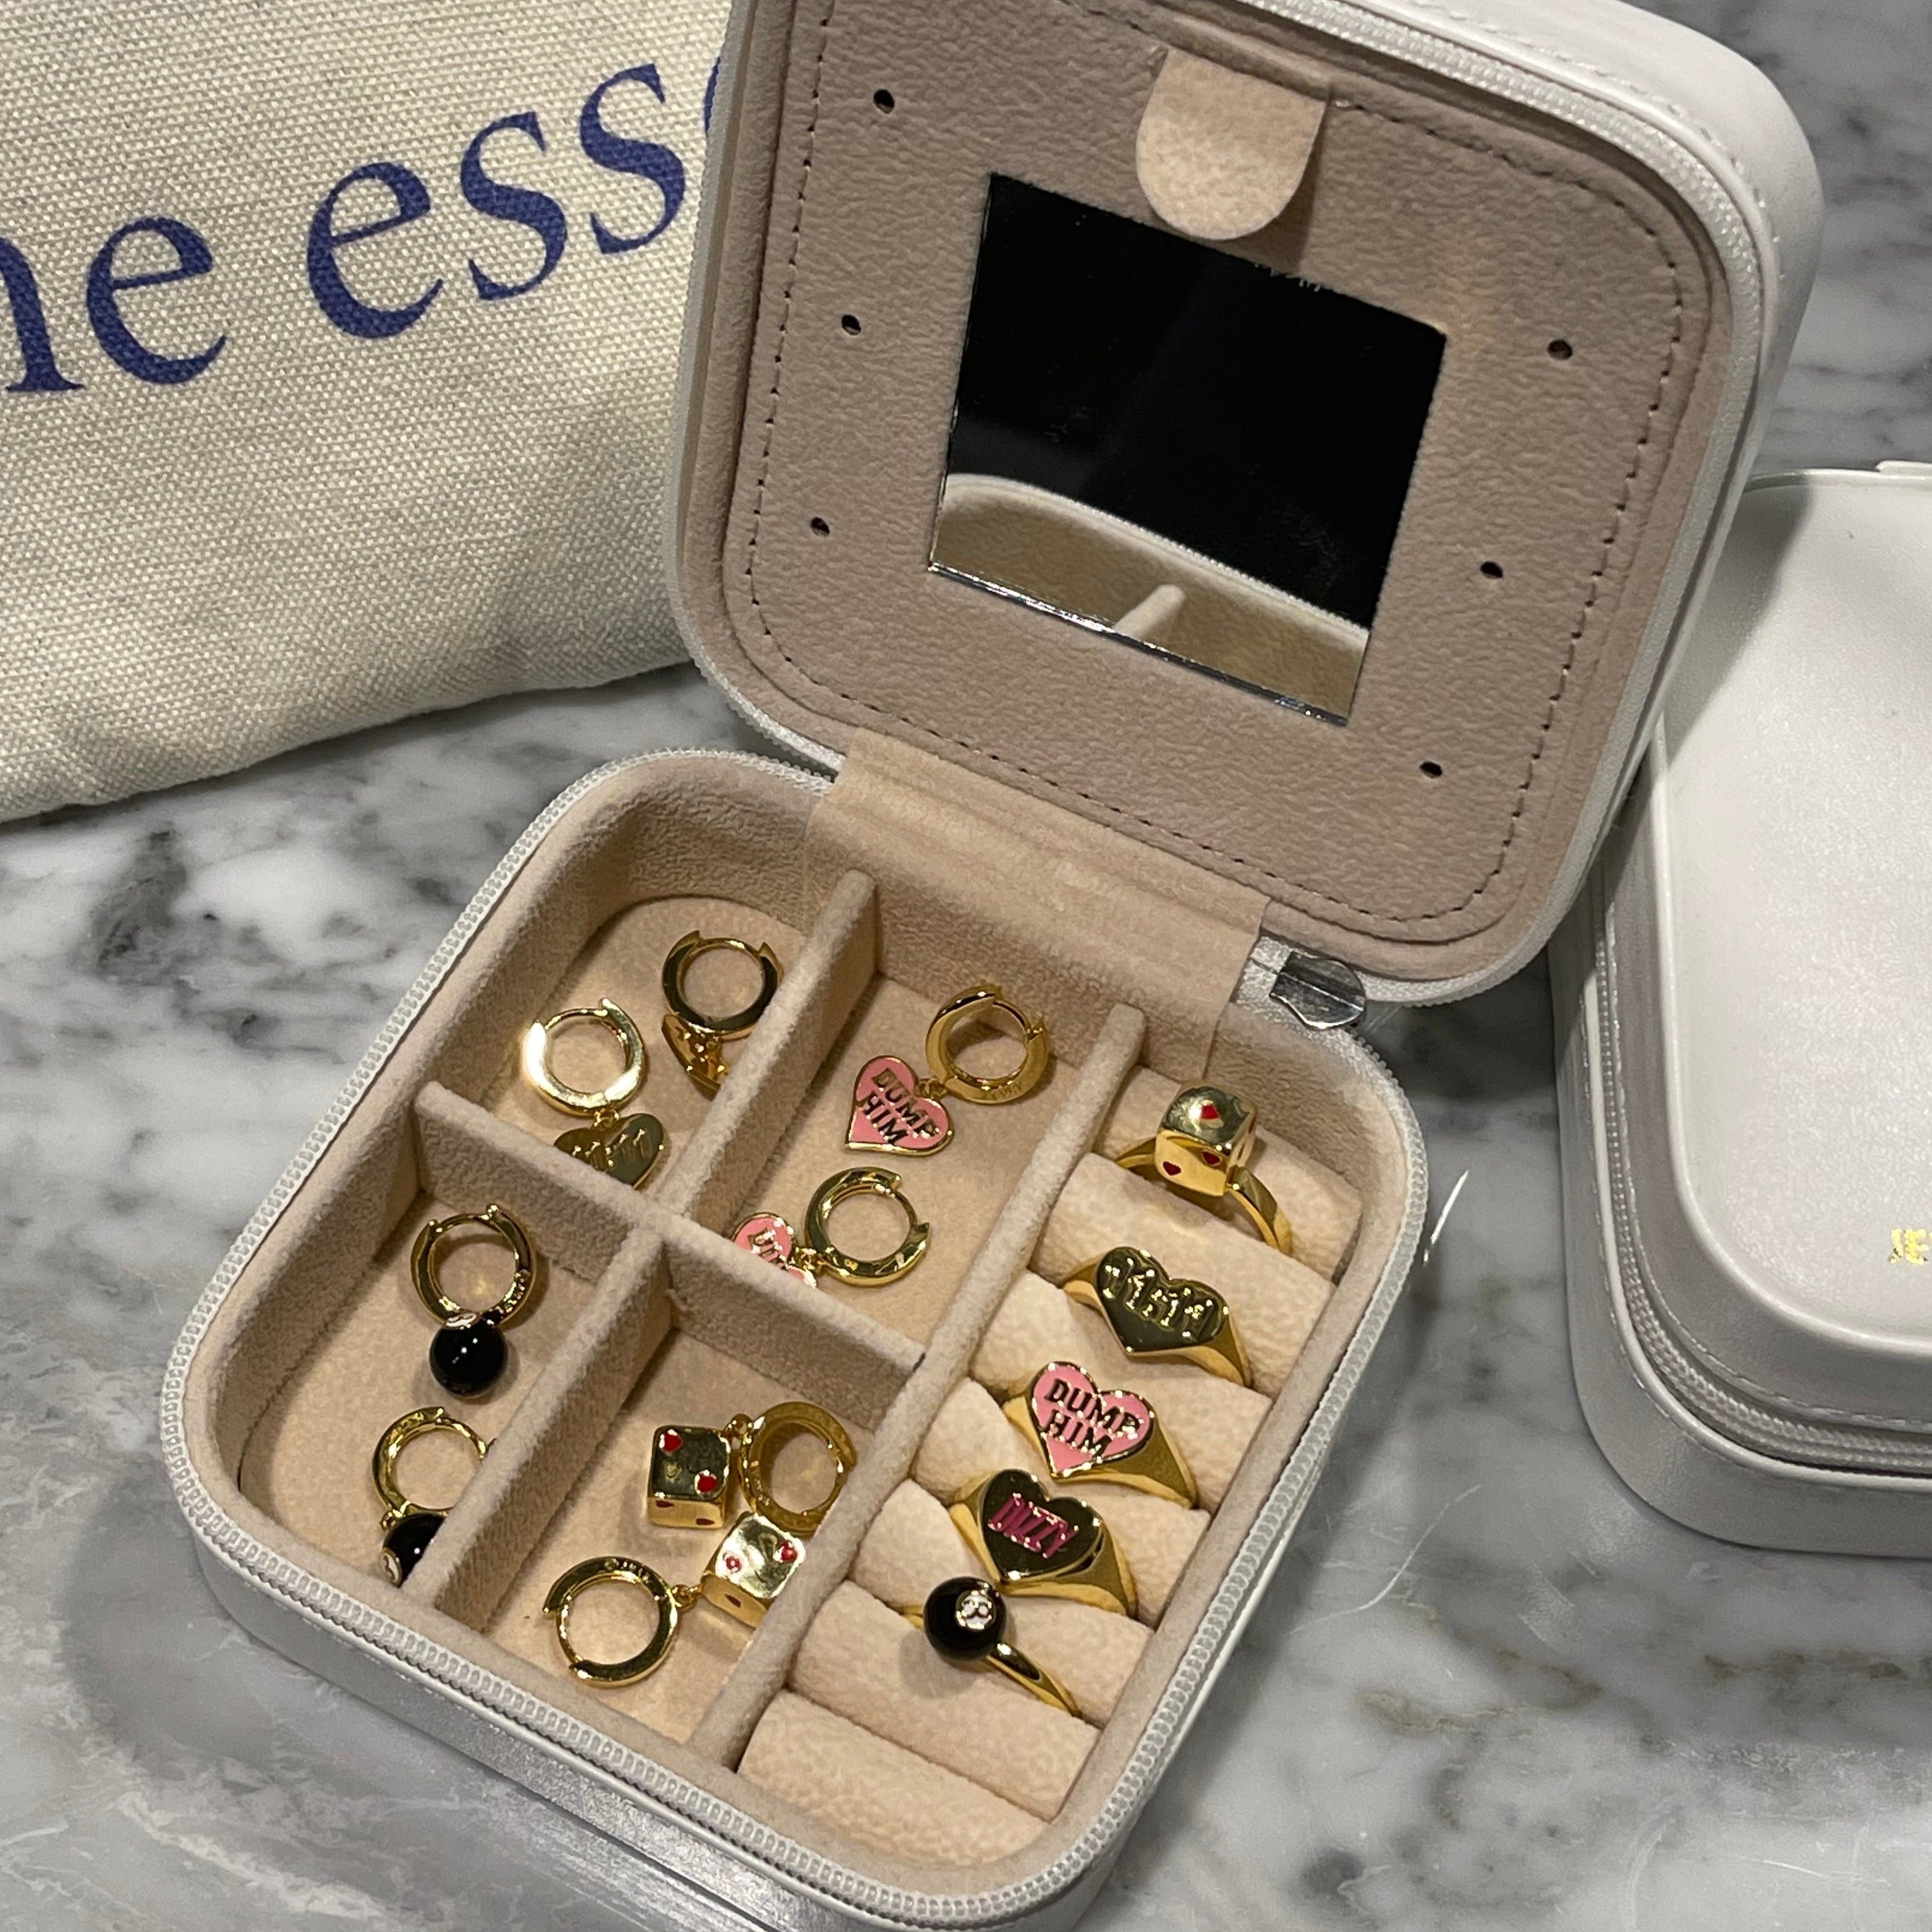 Evry Jewelry Box - EVRYJEWELS